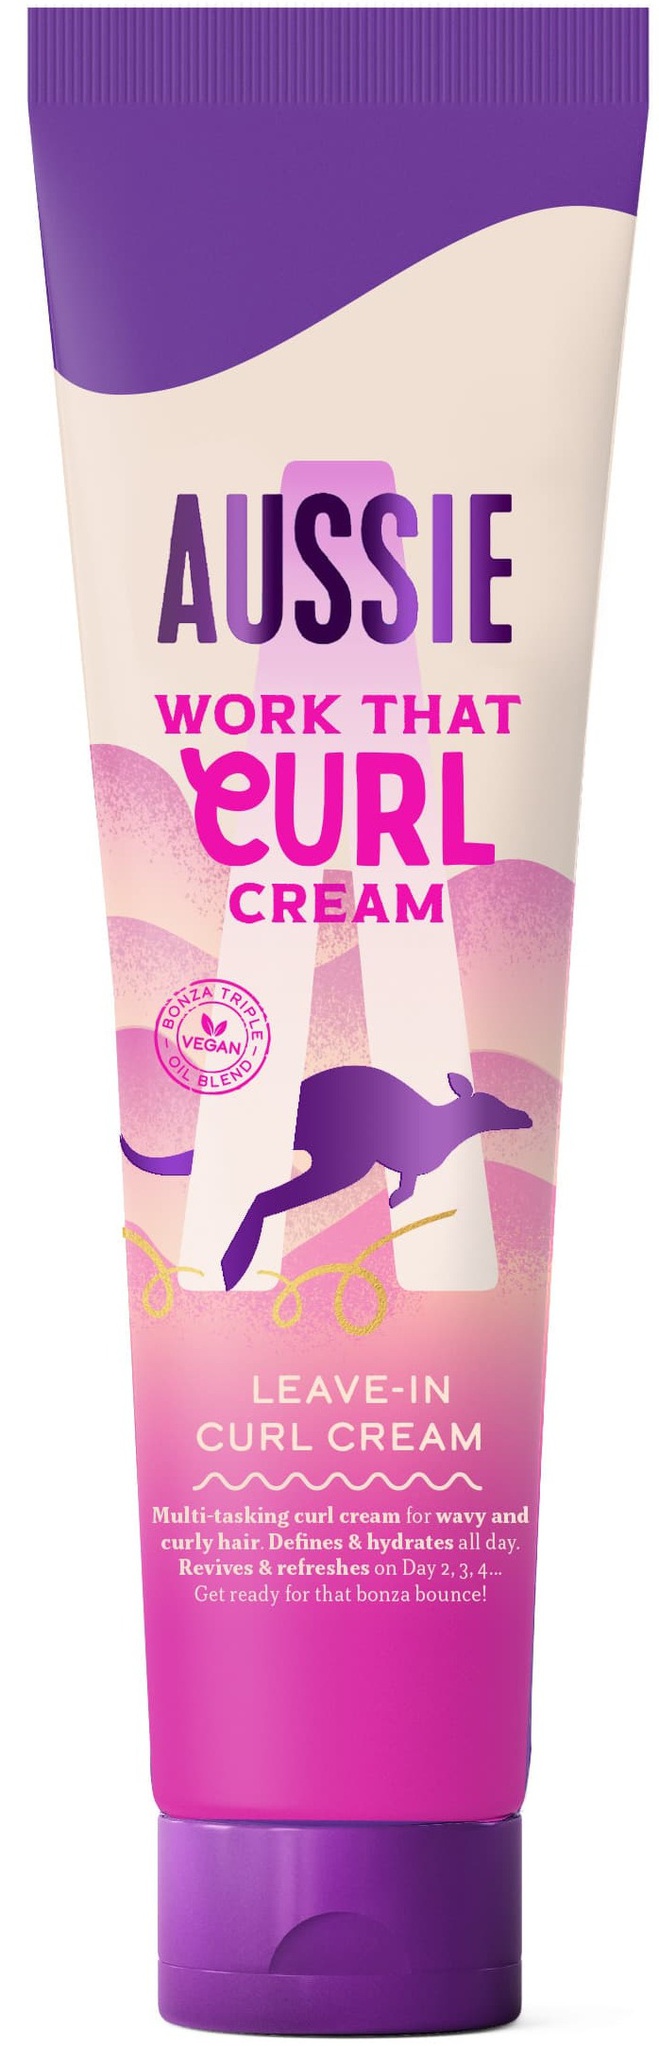 Aussie Leave-in Curl Cream